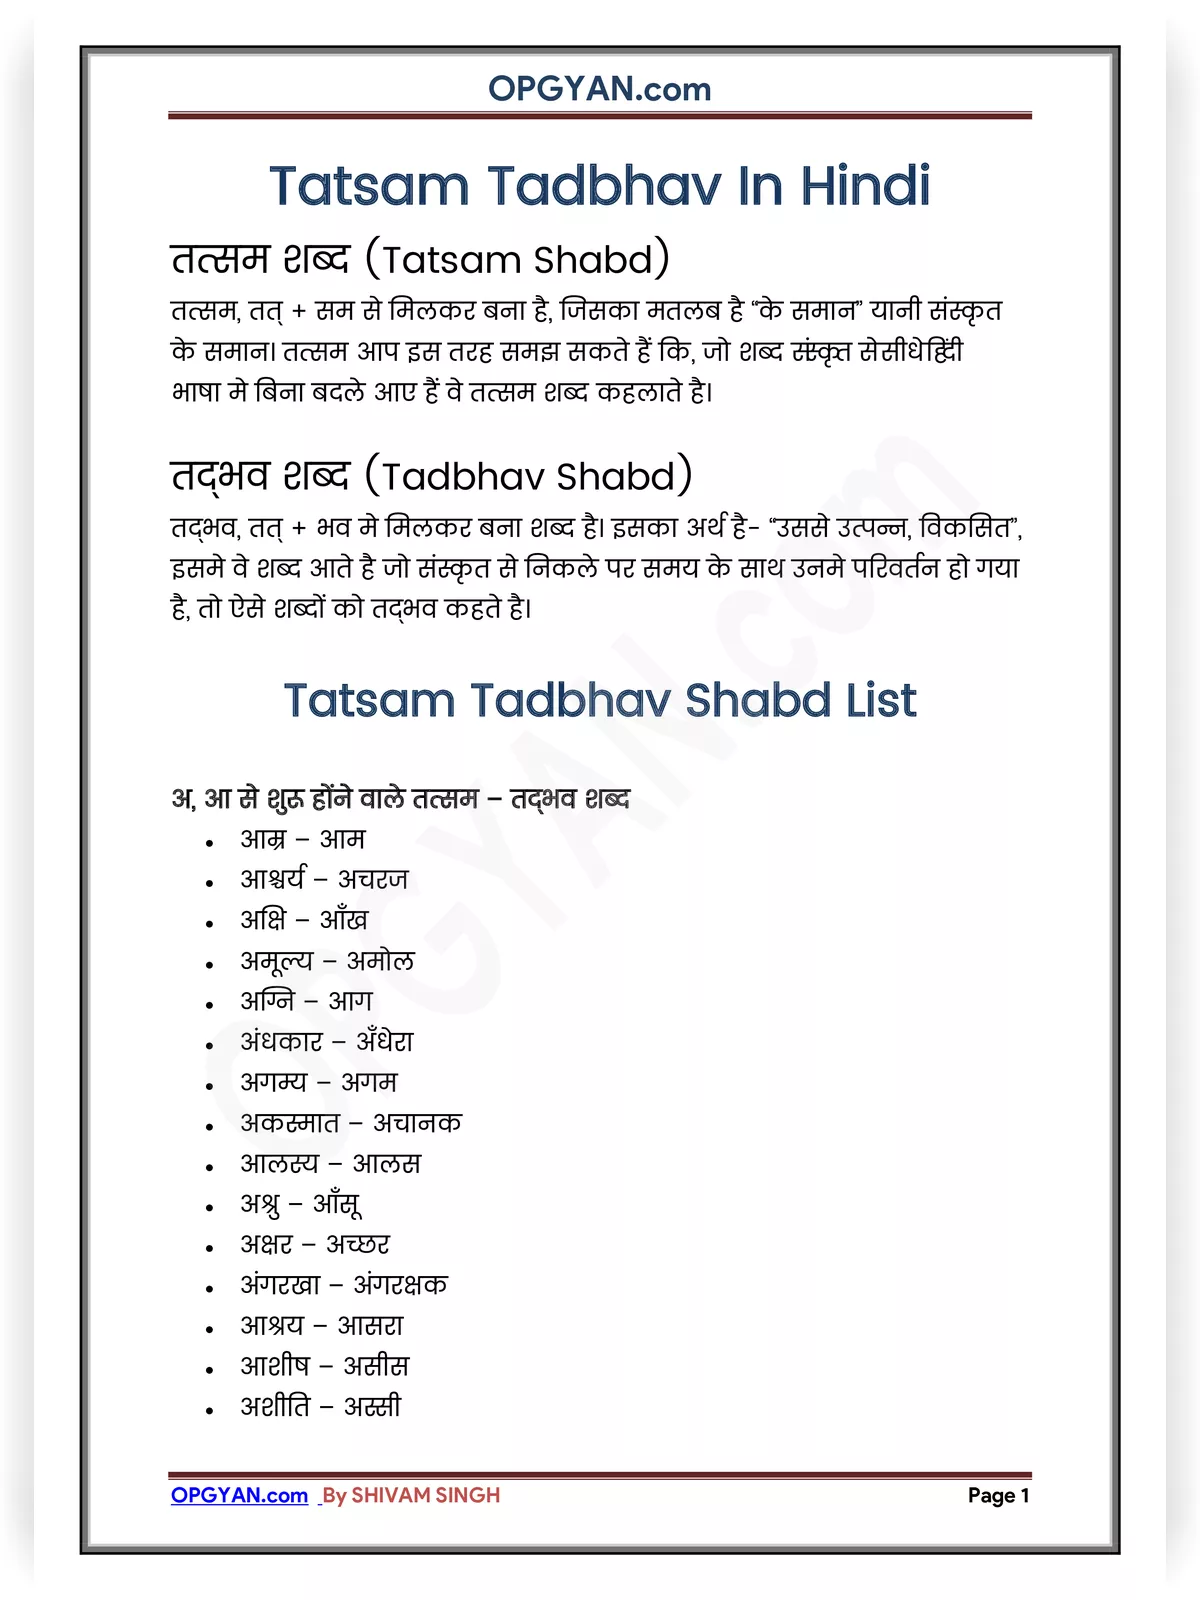 Tatsama Tadbhava Words List